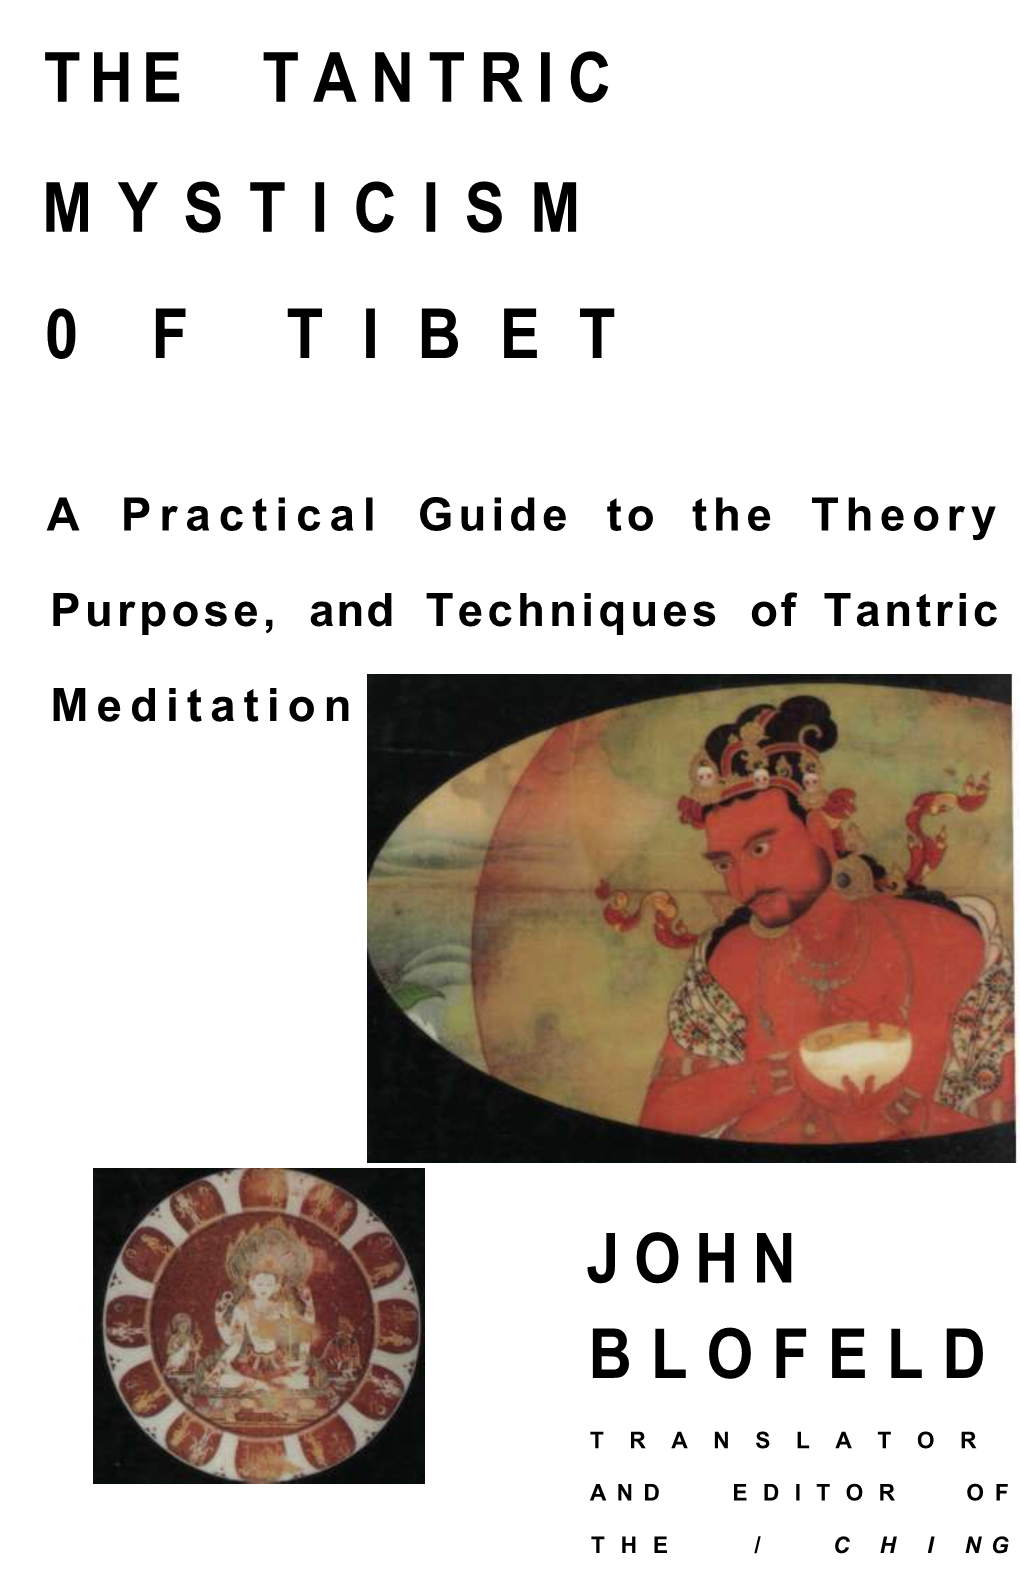 The Tantric Mysticism 0 F T I B E T John Blofeld